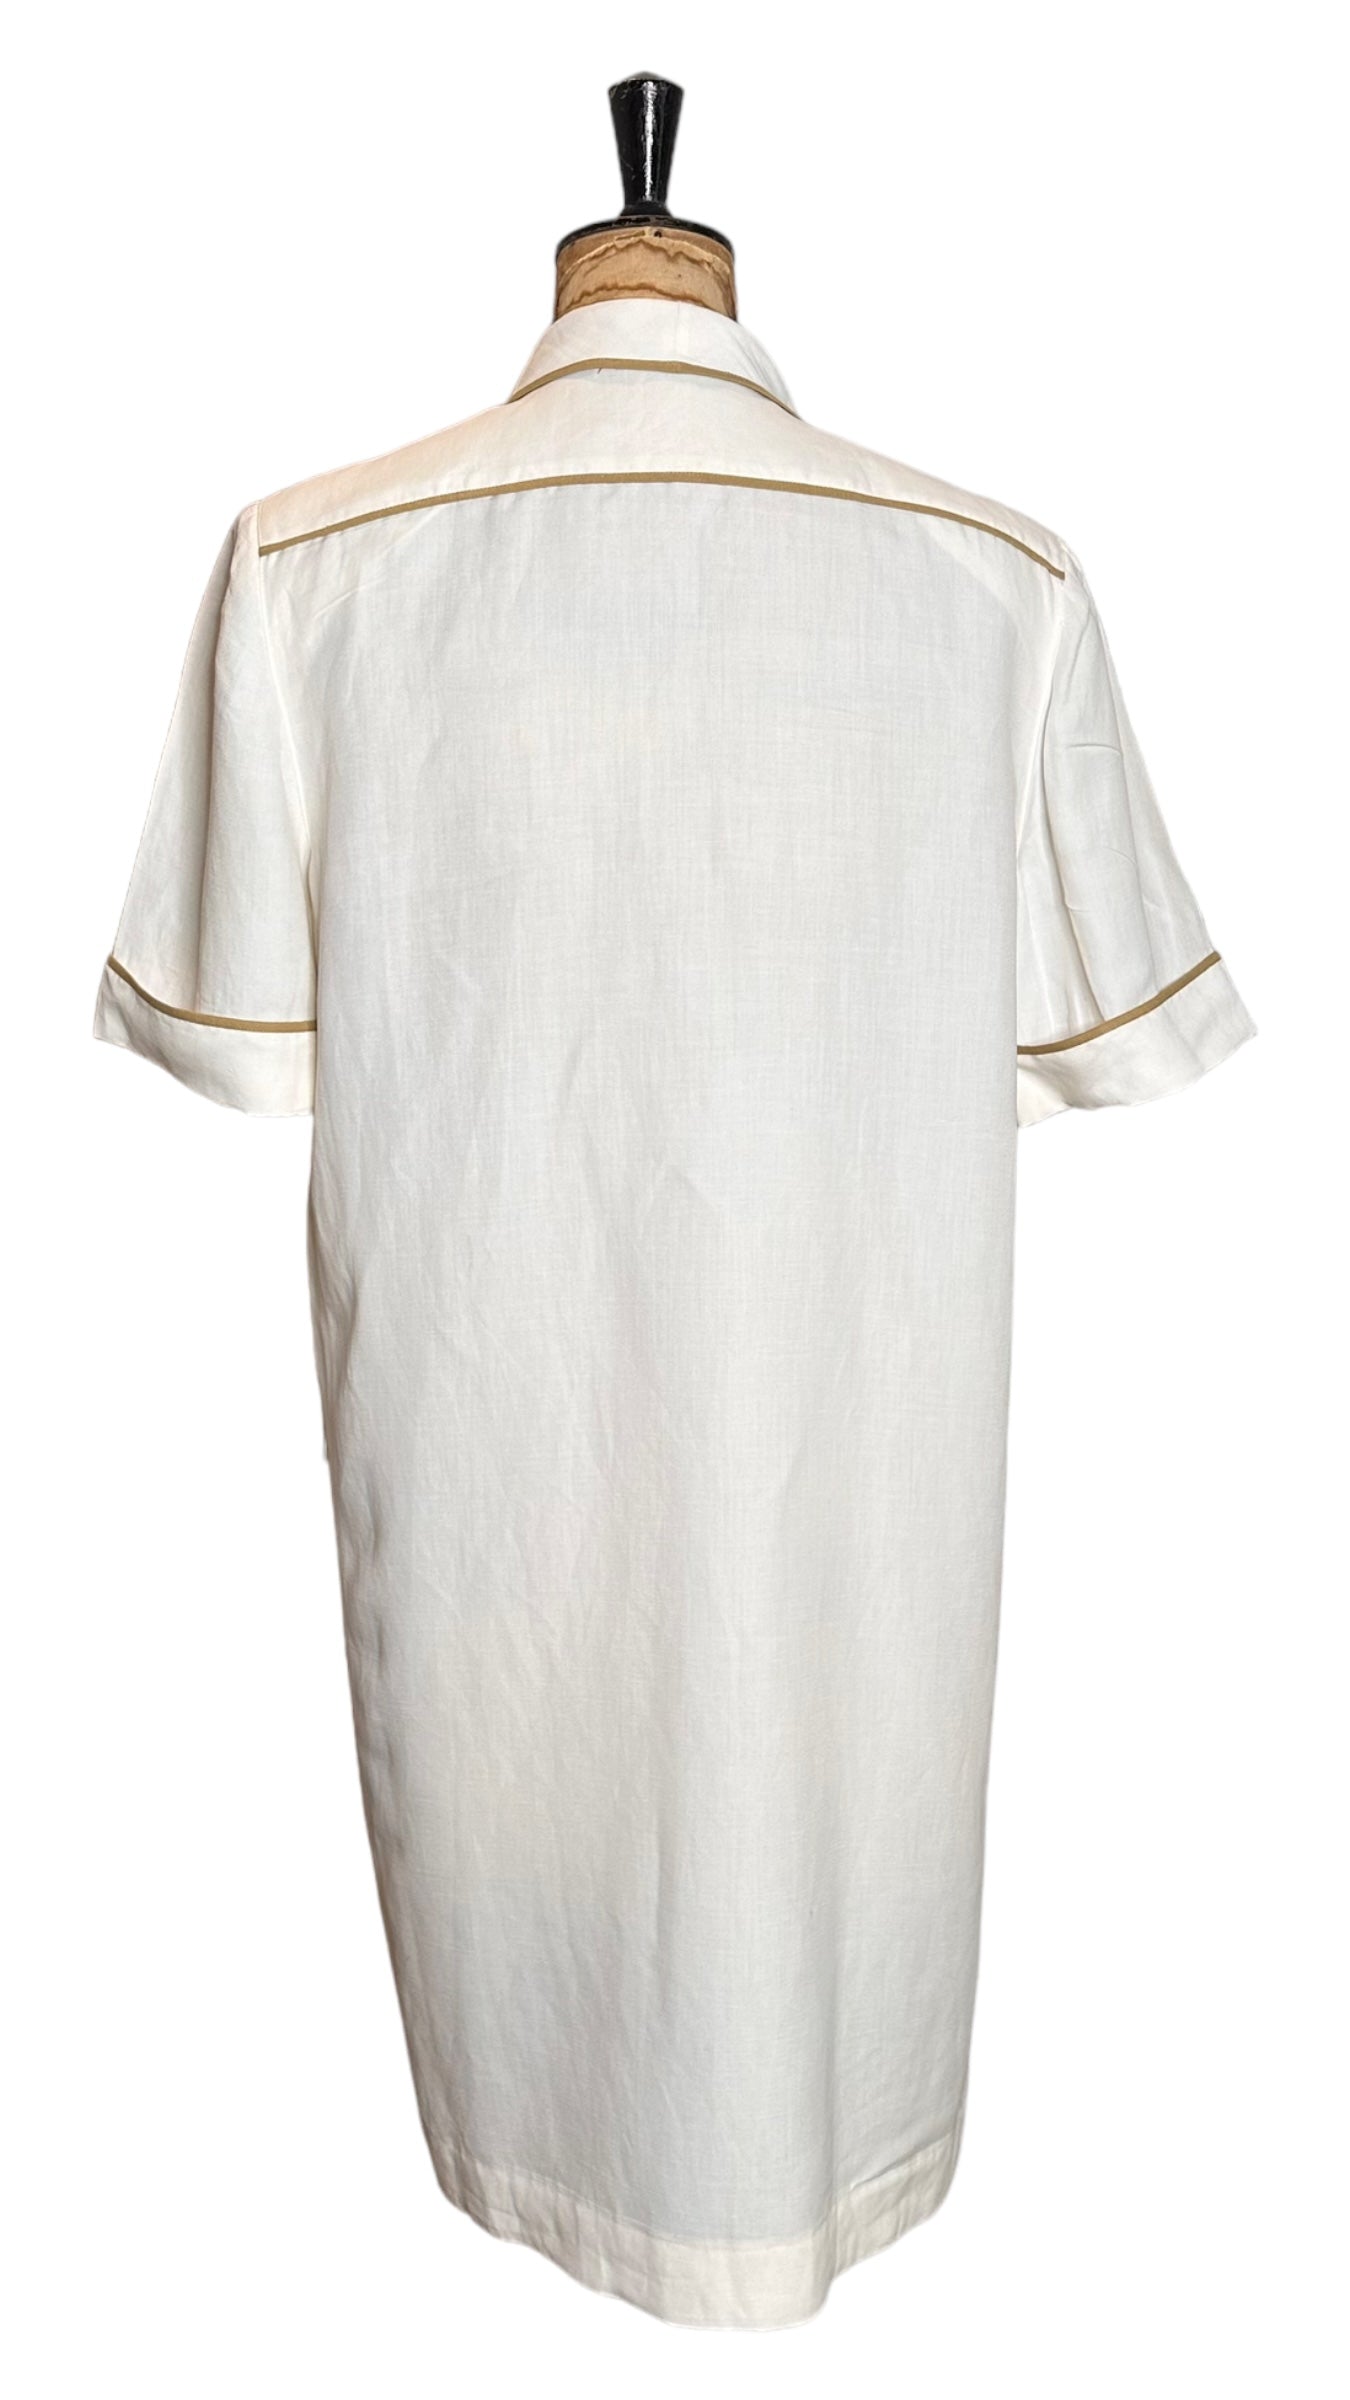 80s Vintage White Shirtdress Size UK 12- 14